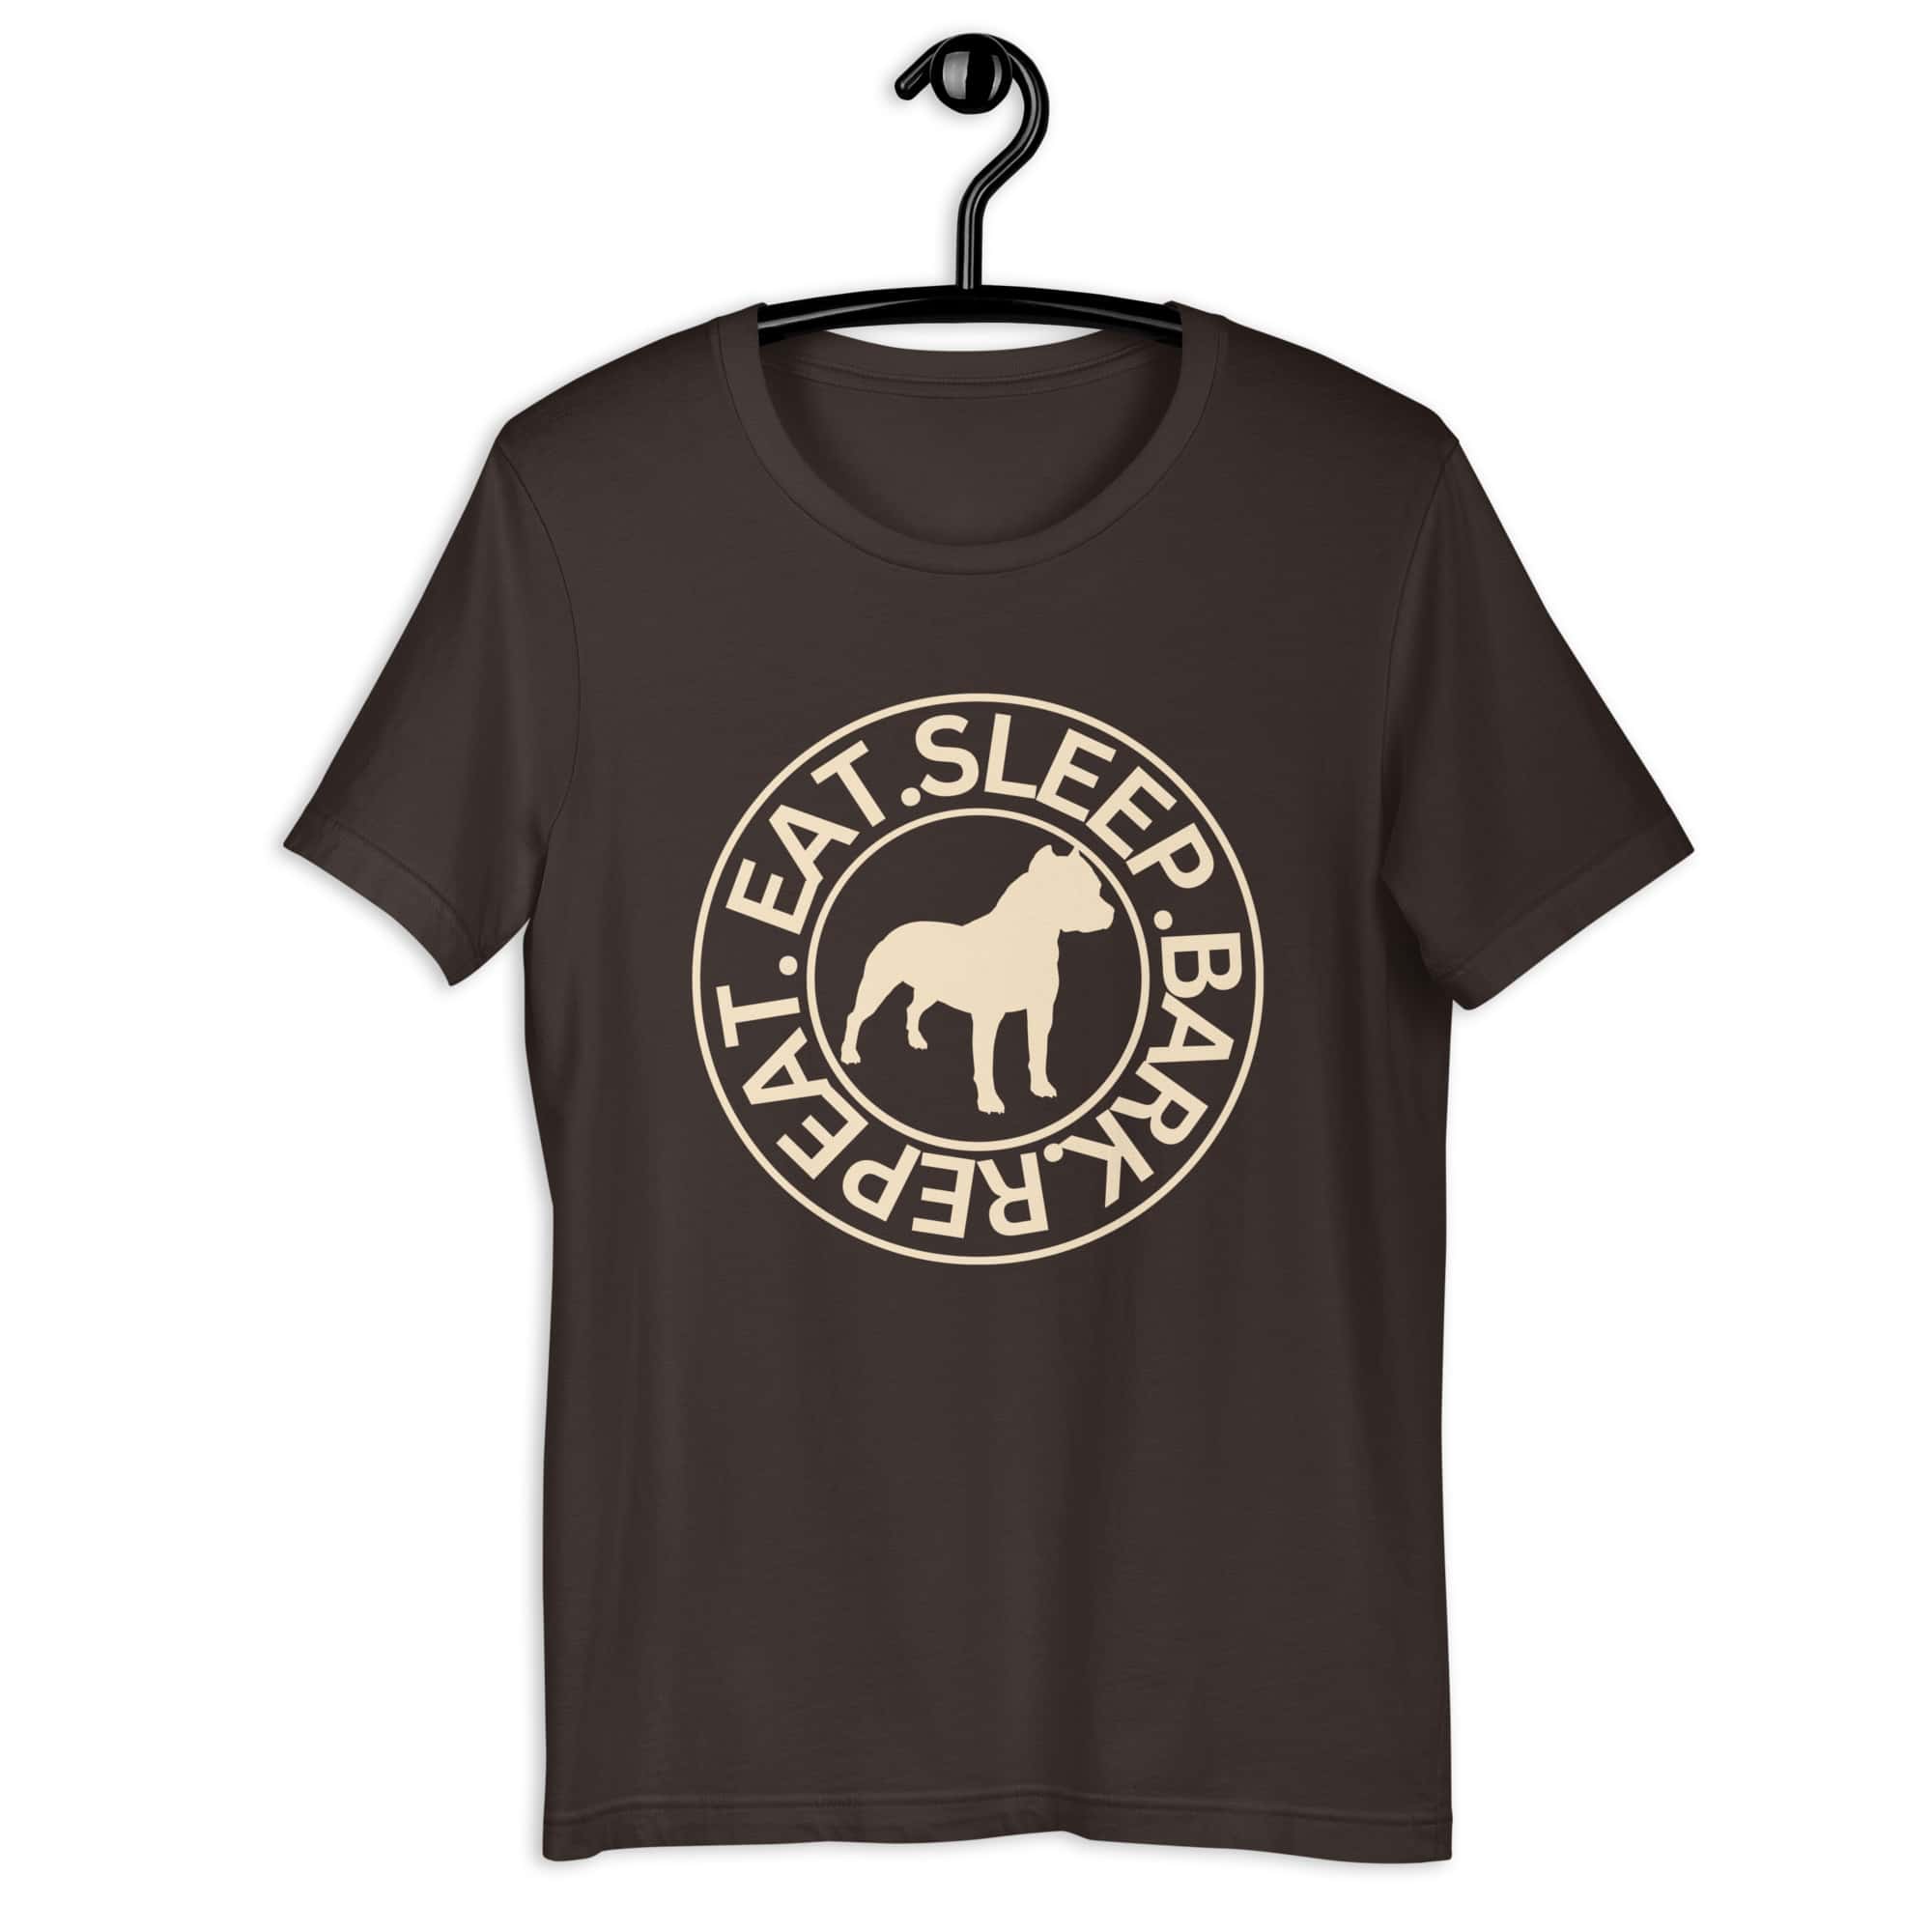 Eat Sleep Bark Repeat Toy Bulldog Unisex T-Shirt. Brown